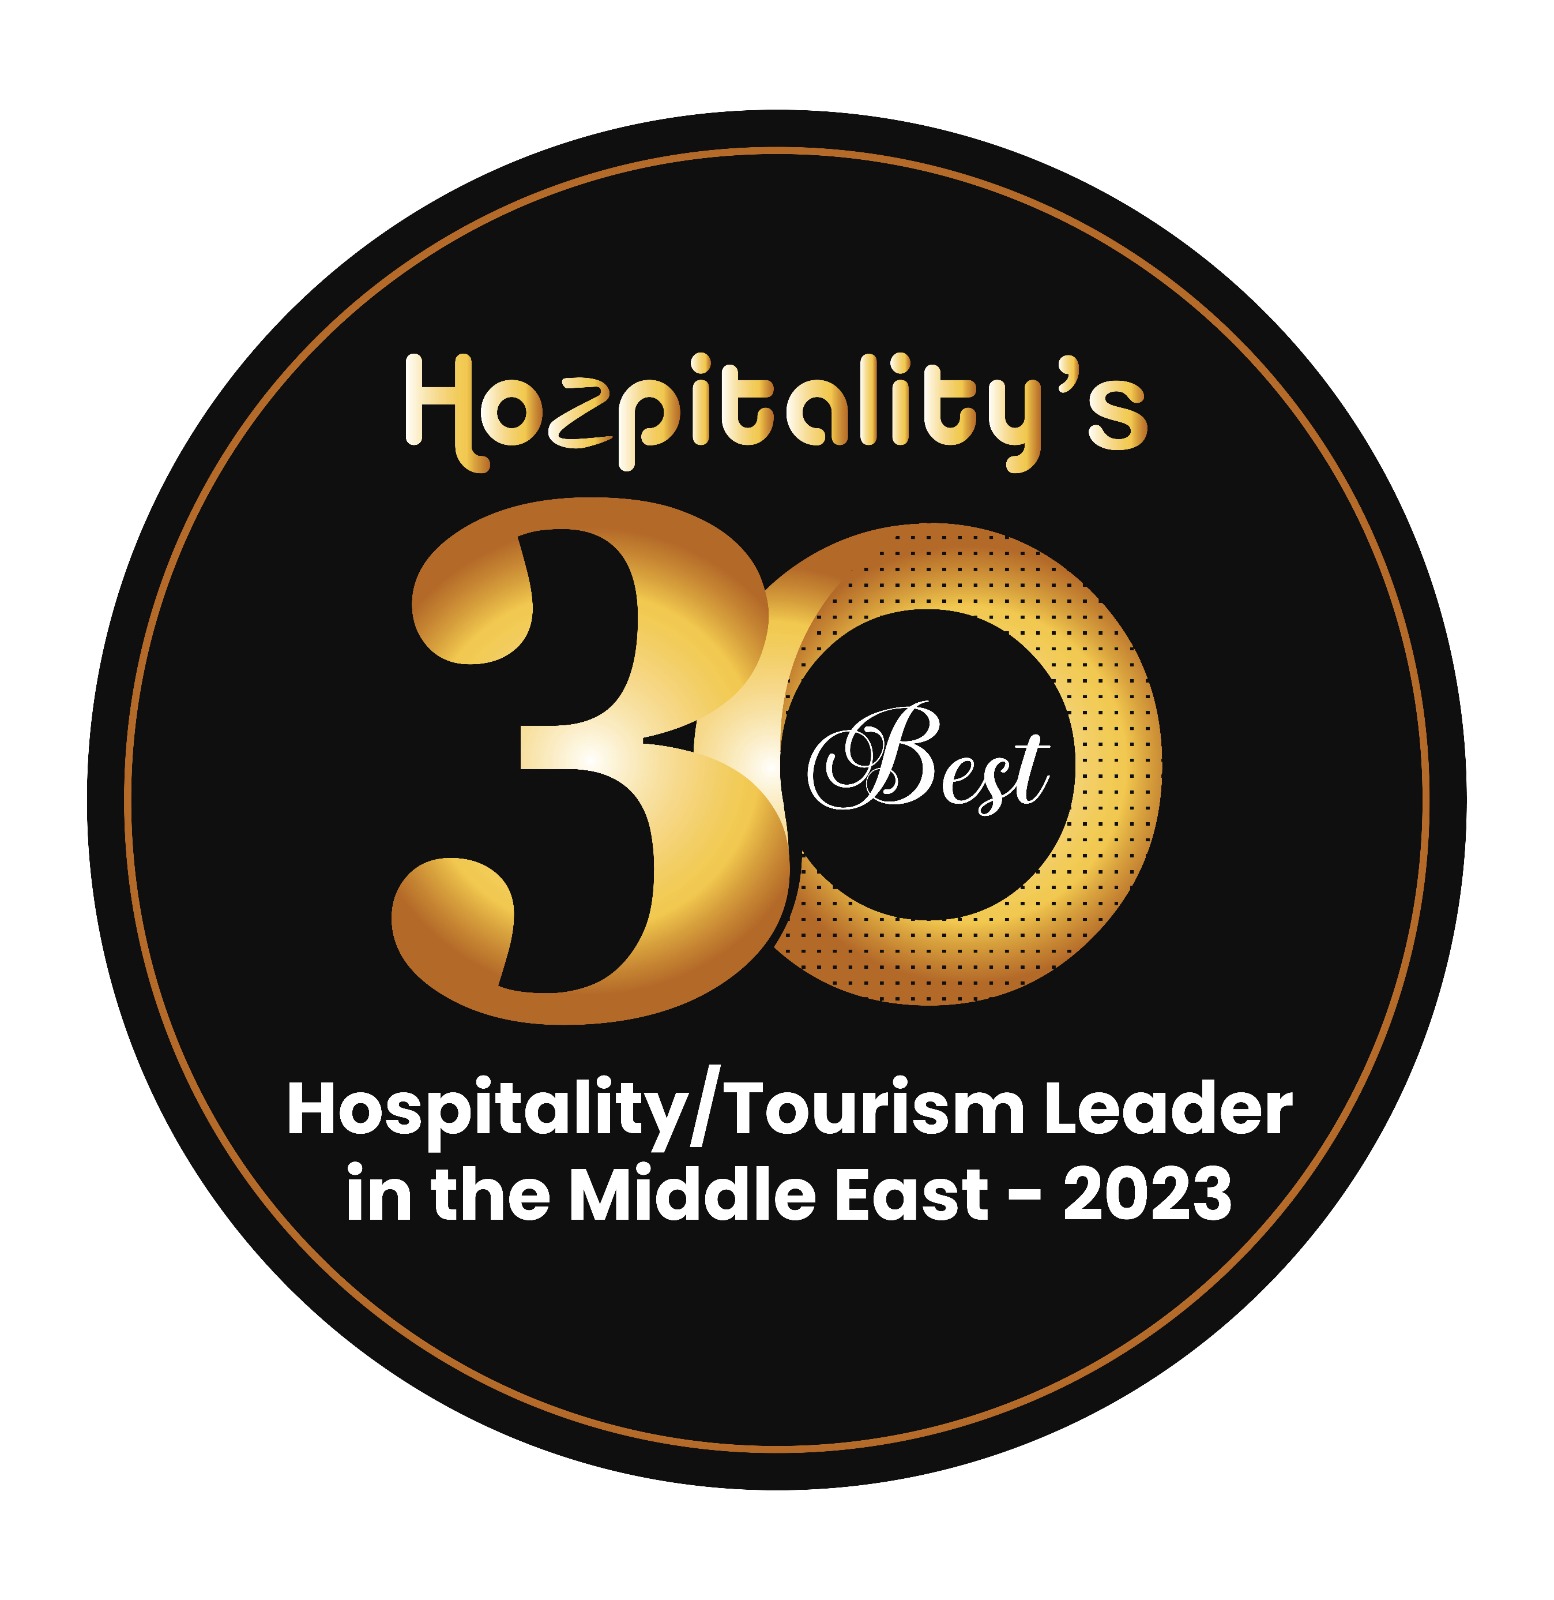 HOSPITALITY/TOURISM LEADERS Popular Hospitality Awards 2023